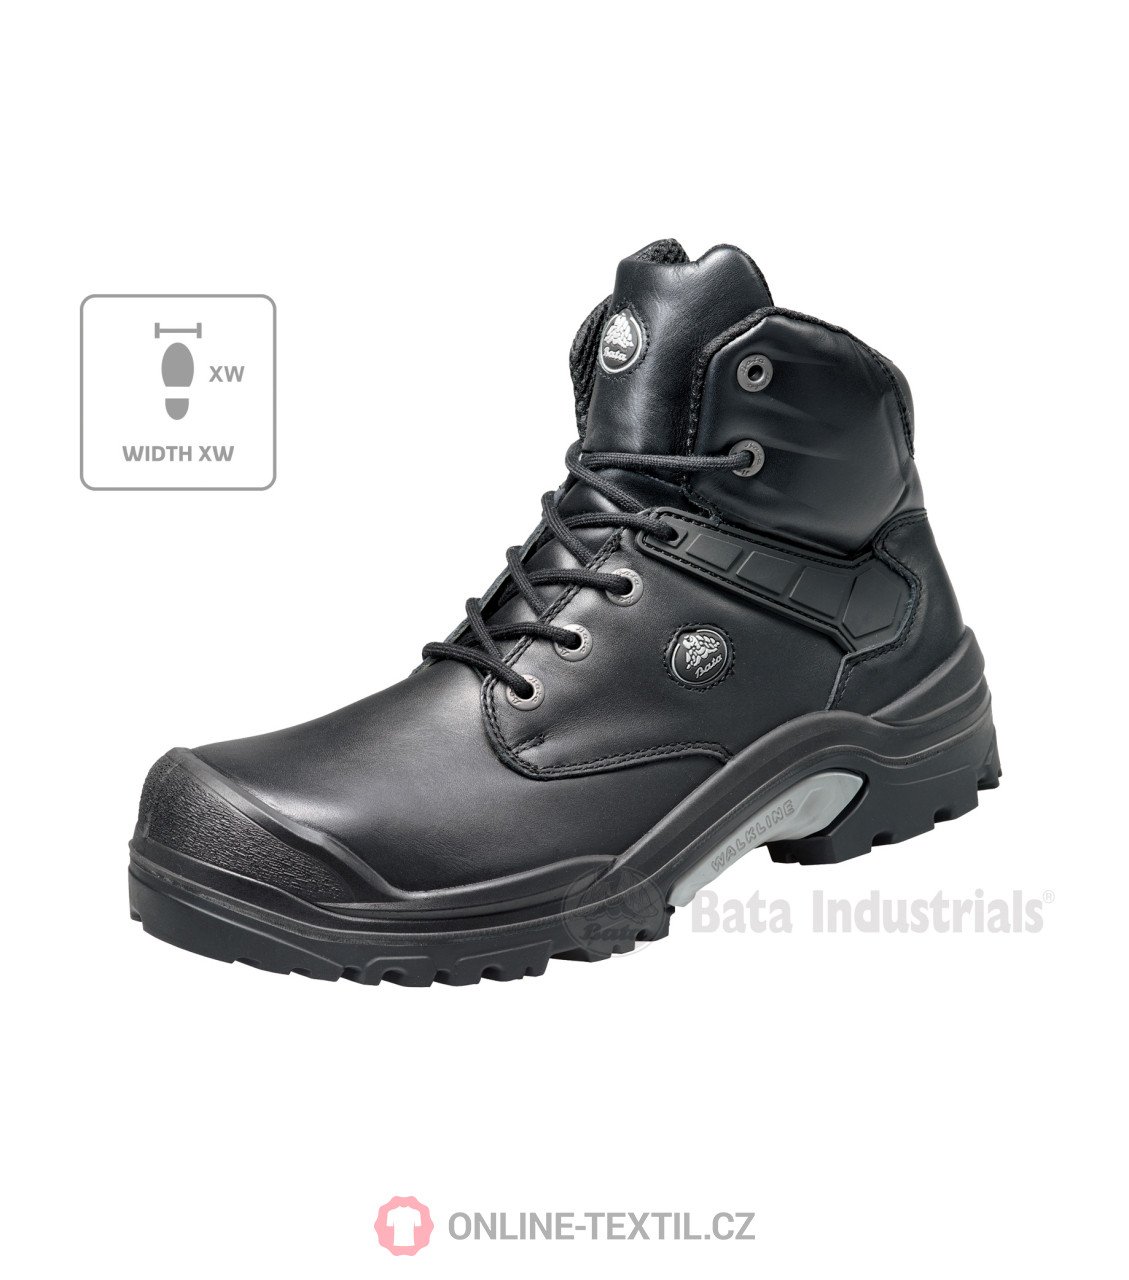 Bata Industrials Safety footwear S3 Pwr 